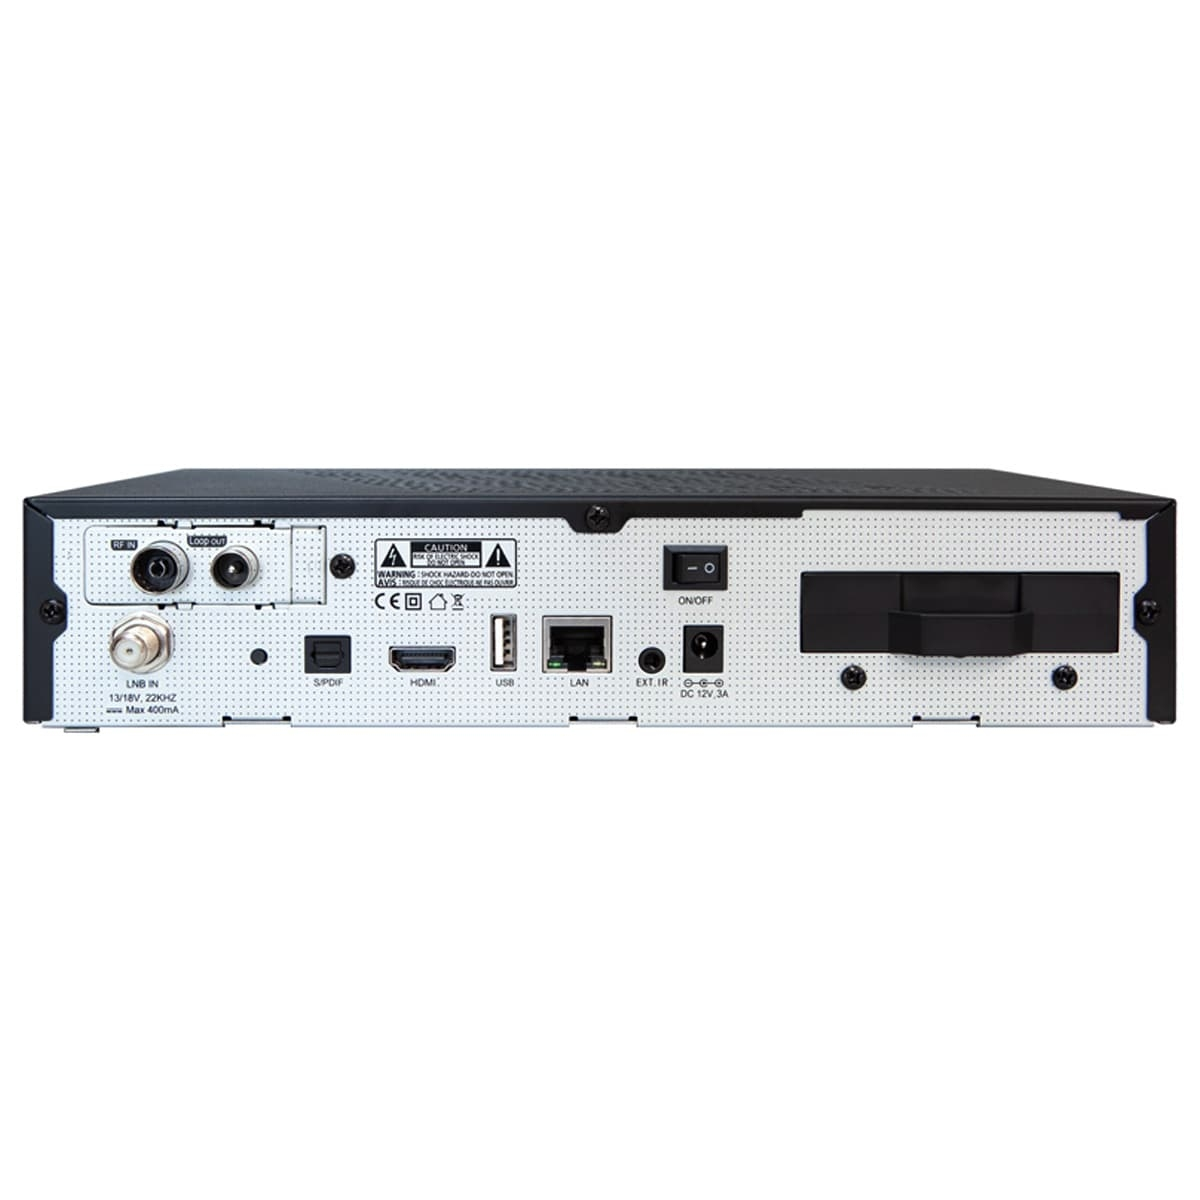 AB-COM PULSe 4K Combo 5TB DVB-S2X Schwarz) Sat-Receiver Tuner, DVB-C/T2 (PVR-Funktion, Twin